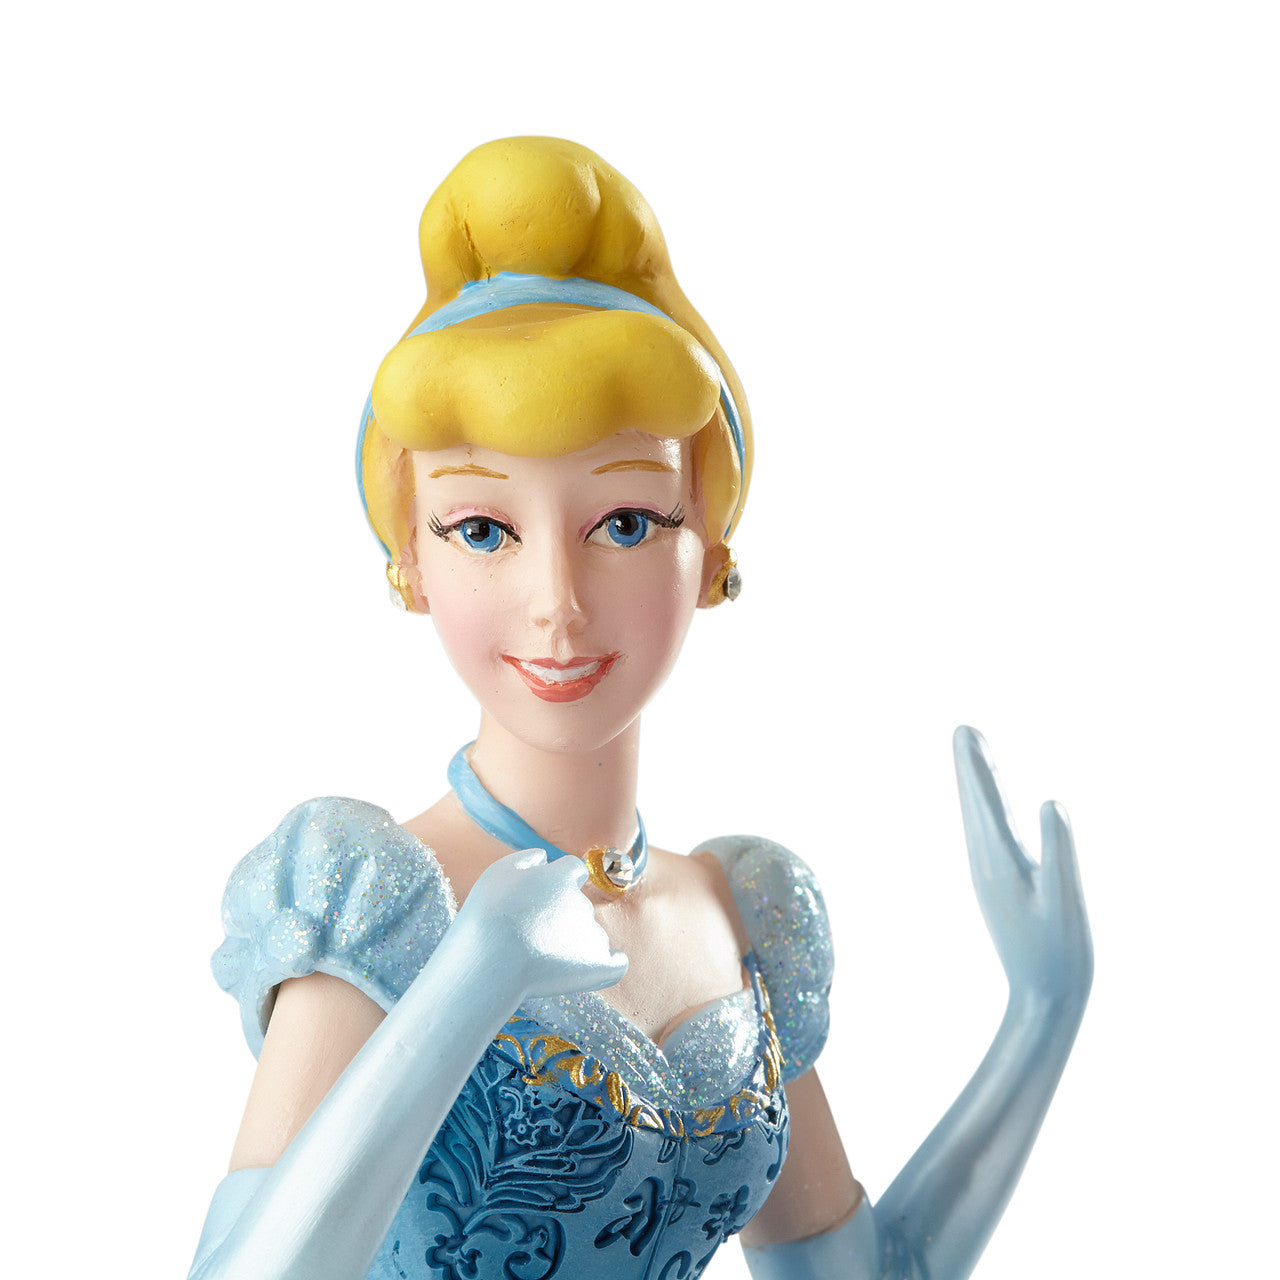 Cinderella Figurine